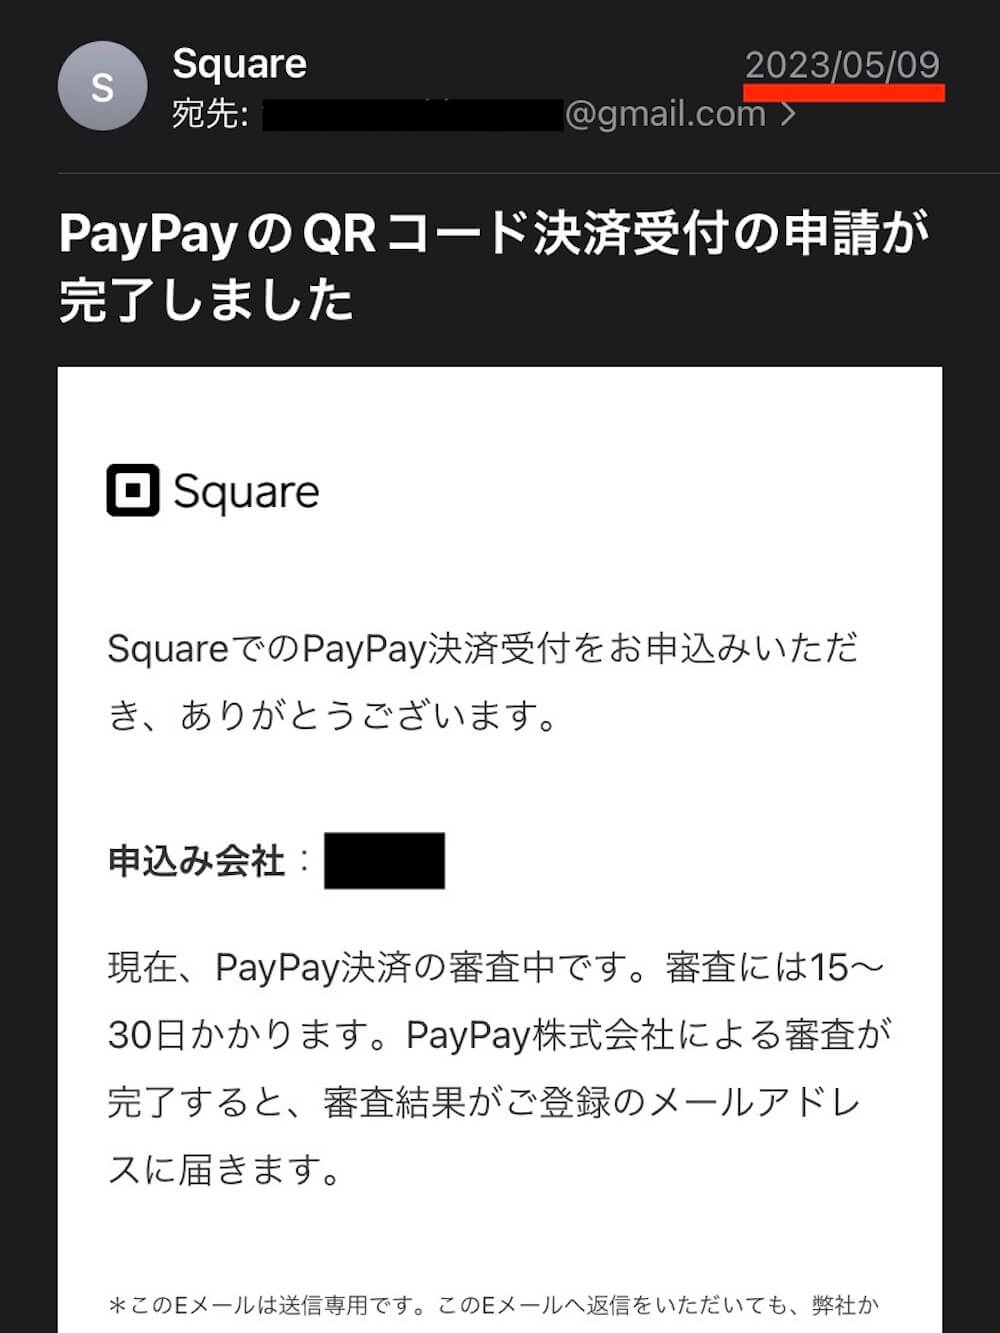 Squareから届くPayPayの申込完了通知メール